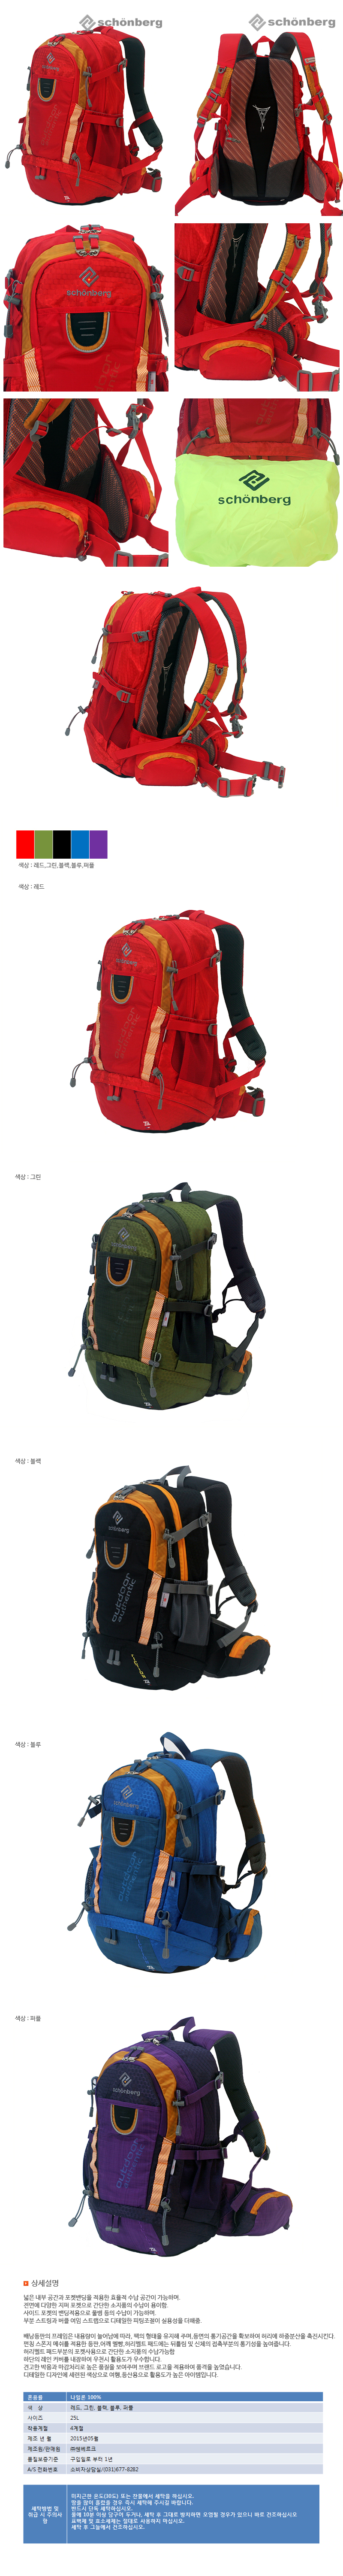 backpack_25l_view.jpg